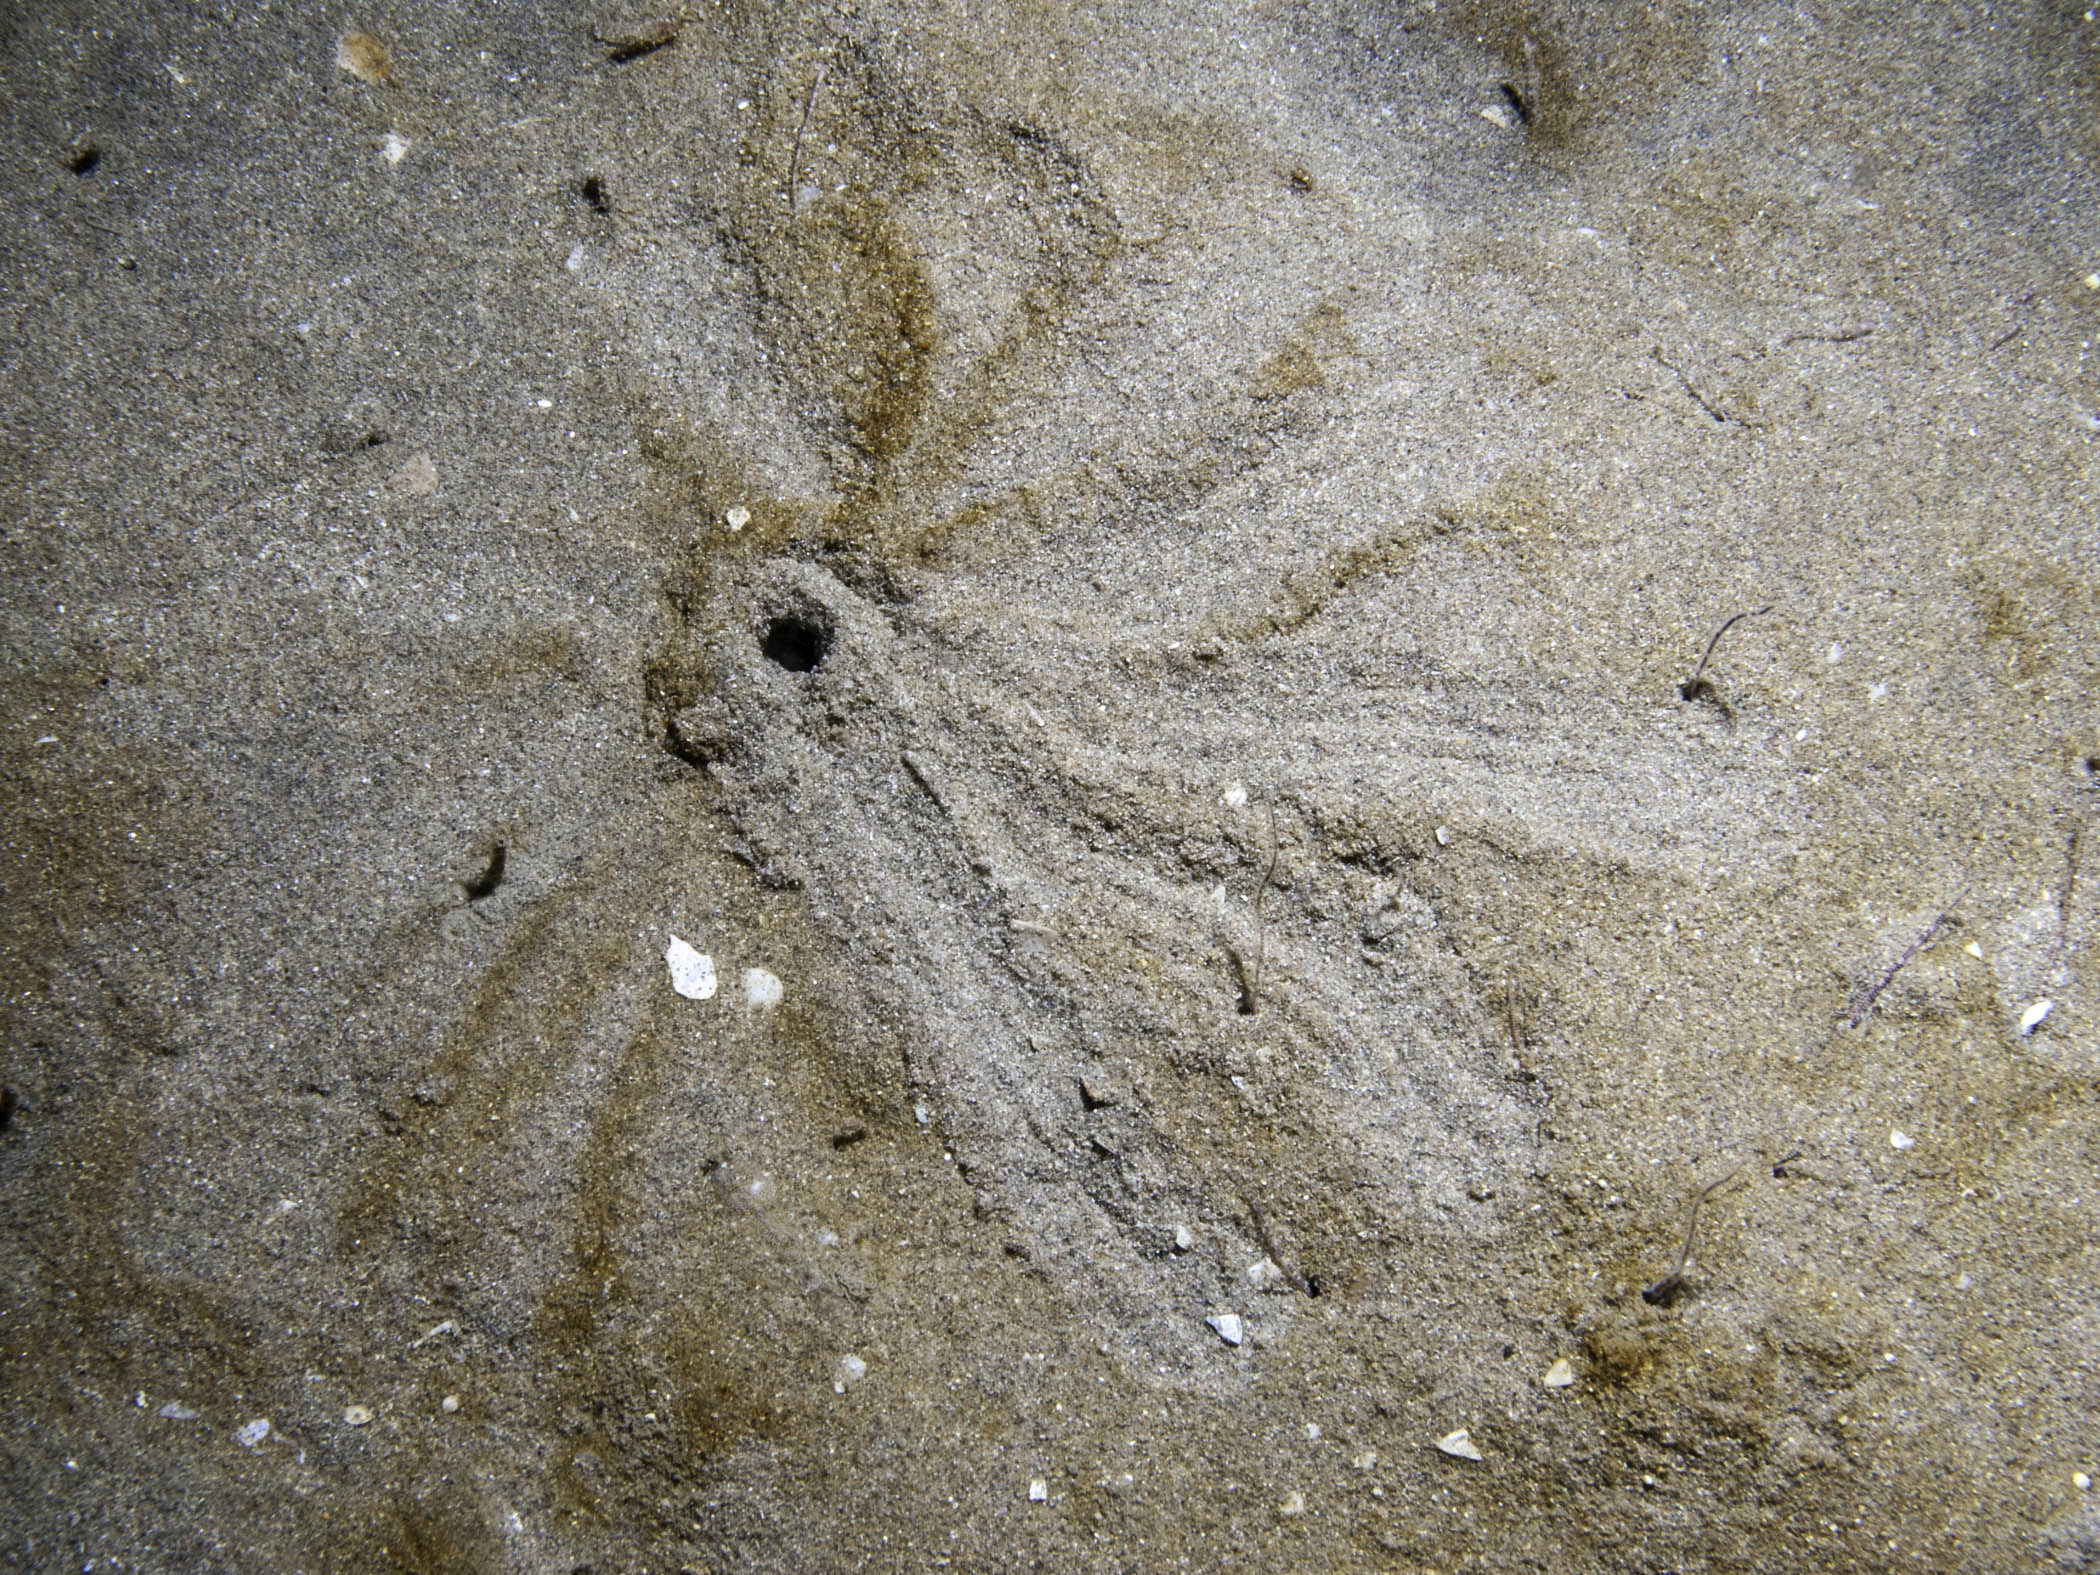 image: Oestergrenia digitata. Distinctive feeding pattern in the sand around the burrow, the arms of brittlestar <i>Amphiura brachiata</i> are visible. Church Bay, Rathlin, Northern Ireland.